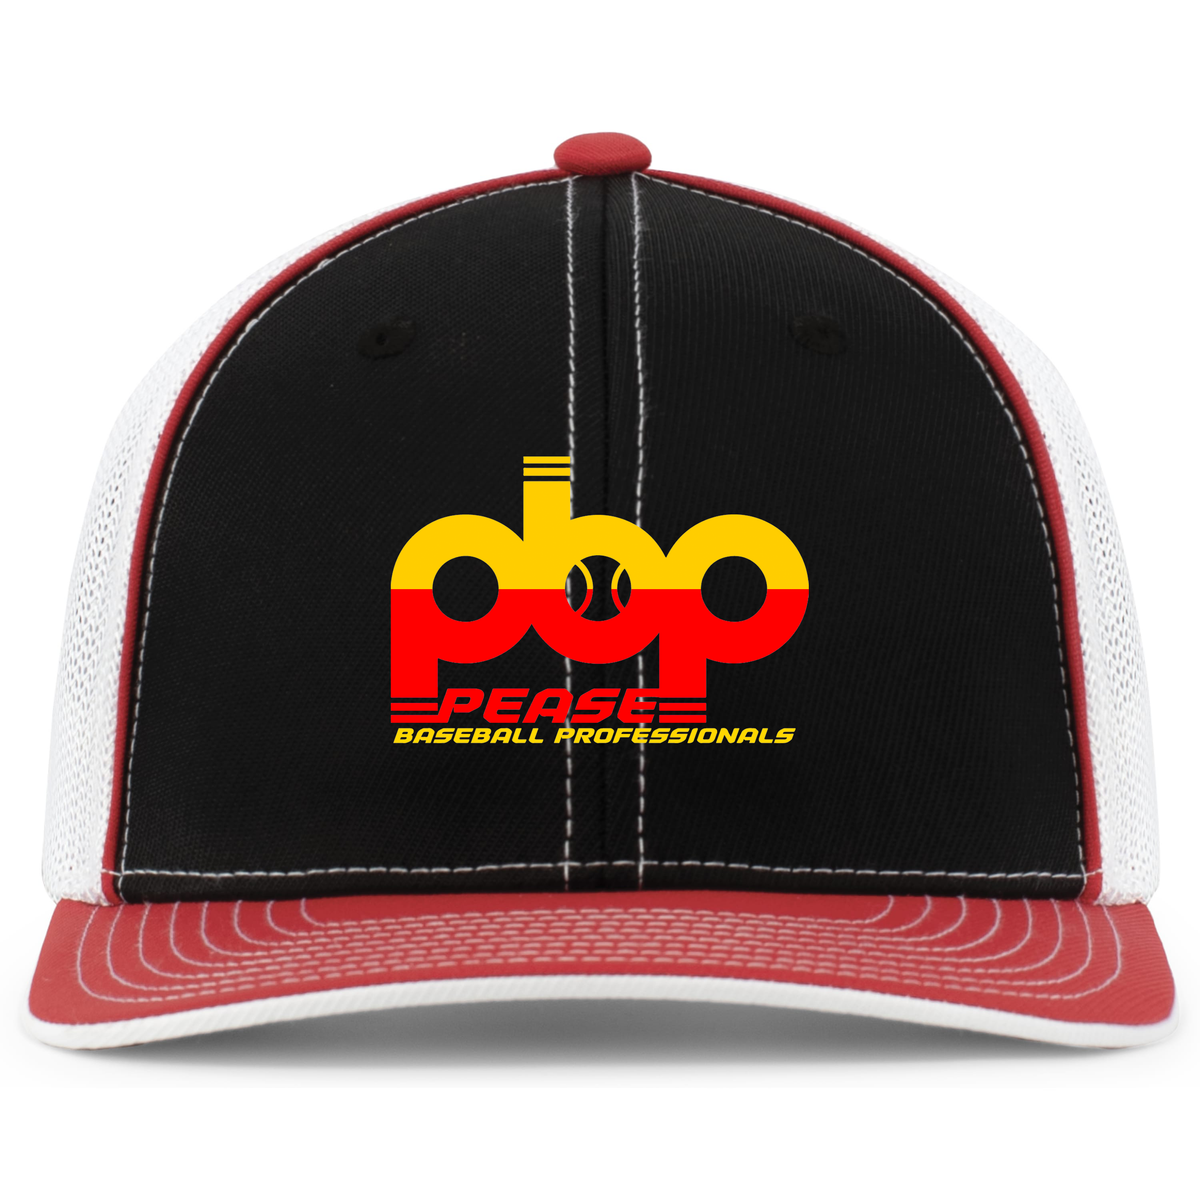 Pease Baseball Professionals Pacific Headwear Flexfit Trucker